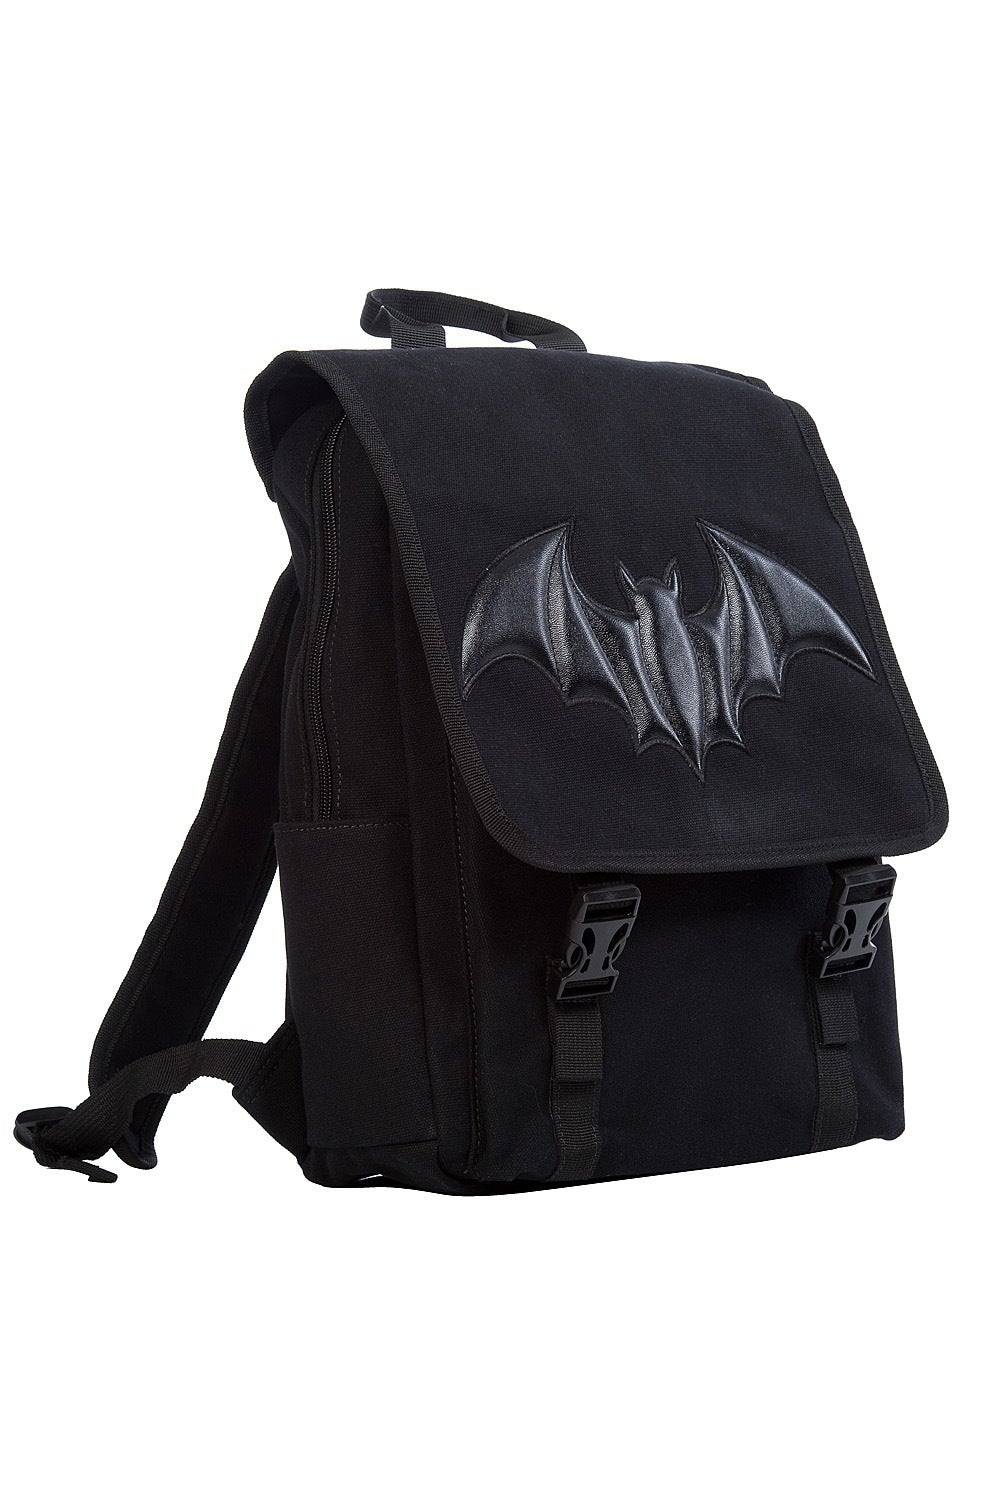 Banned Alternative Dragon Frenzy Backpack